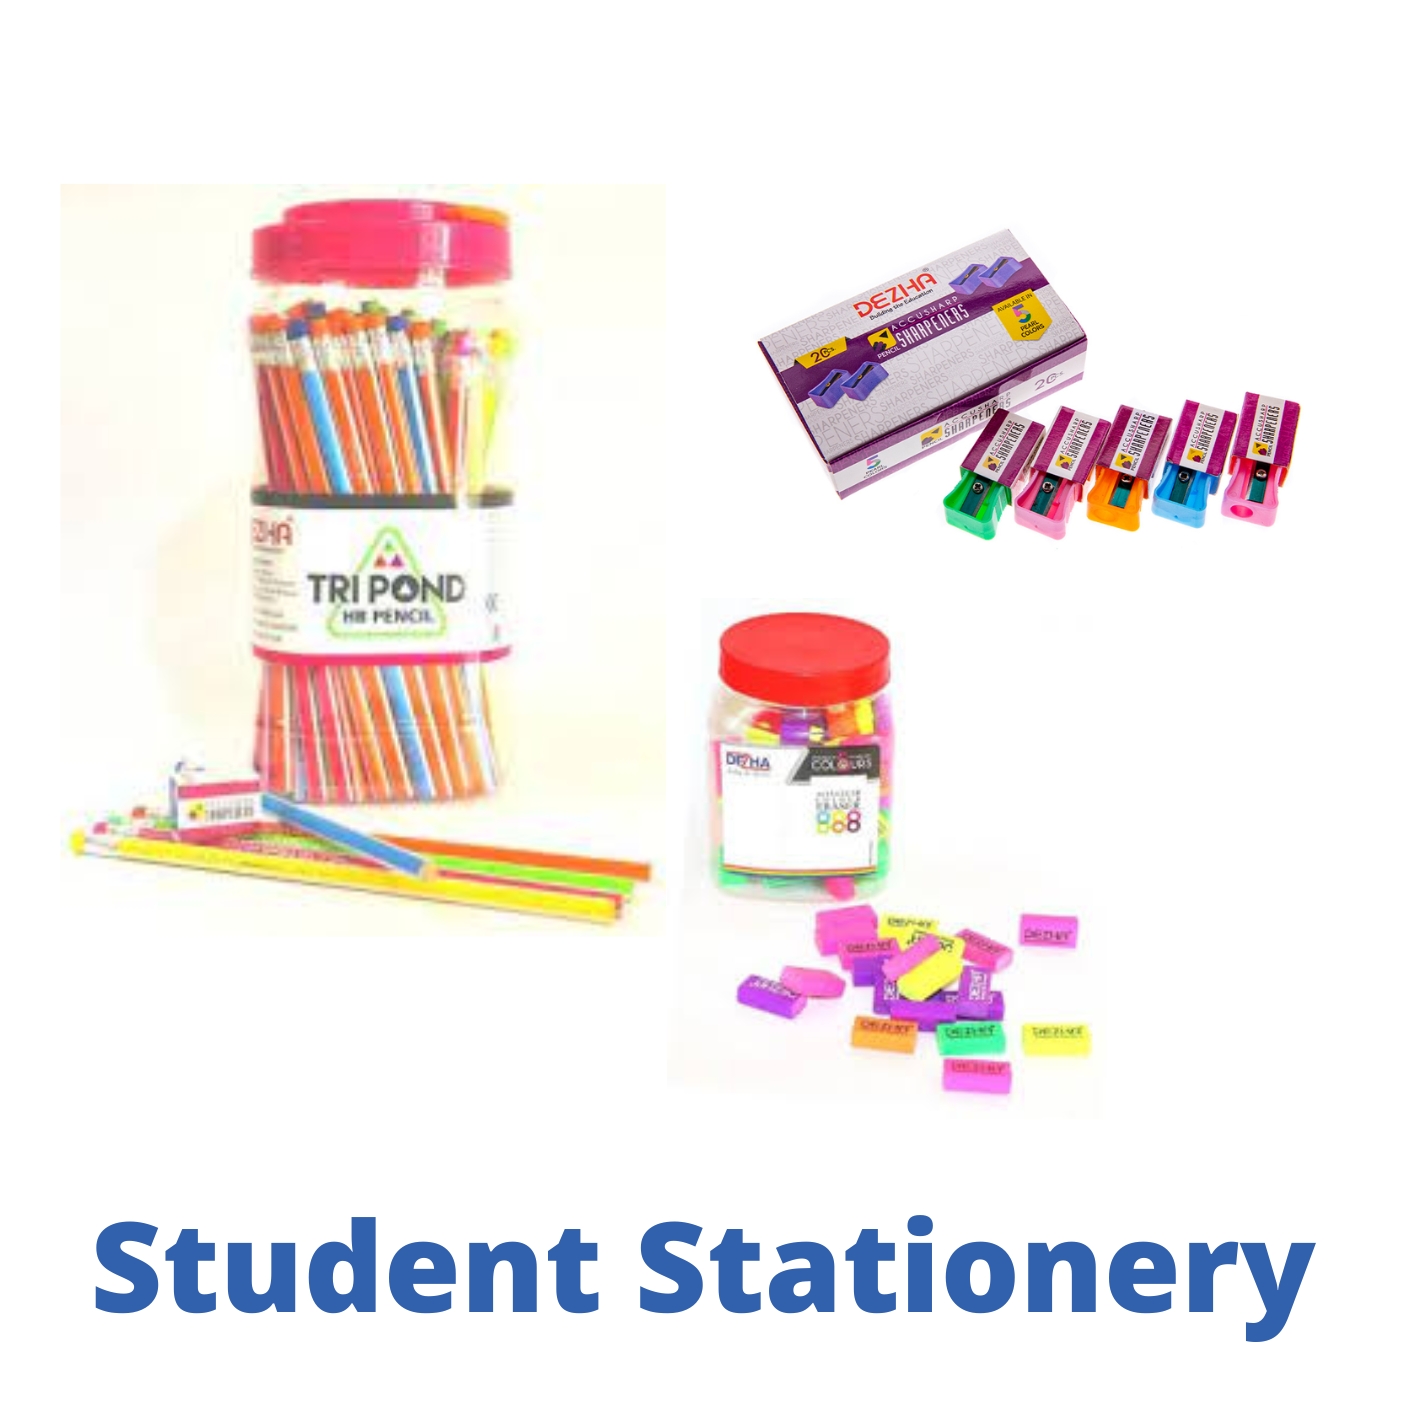 Student Stationery